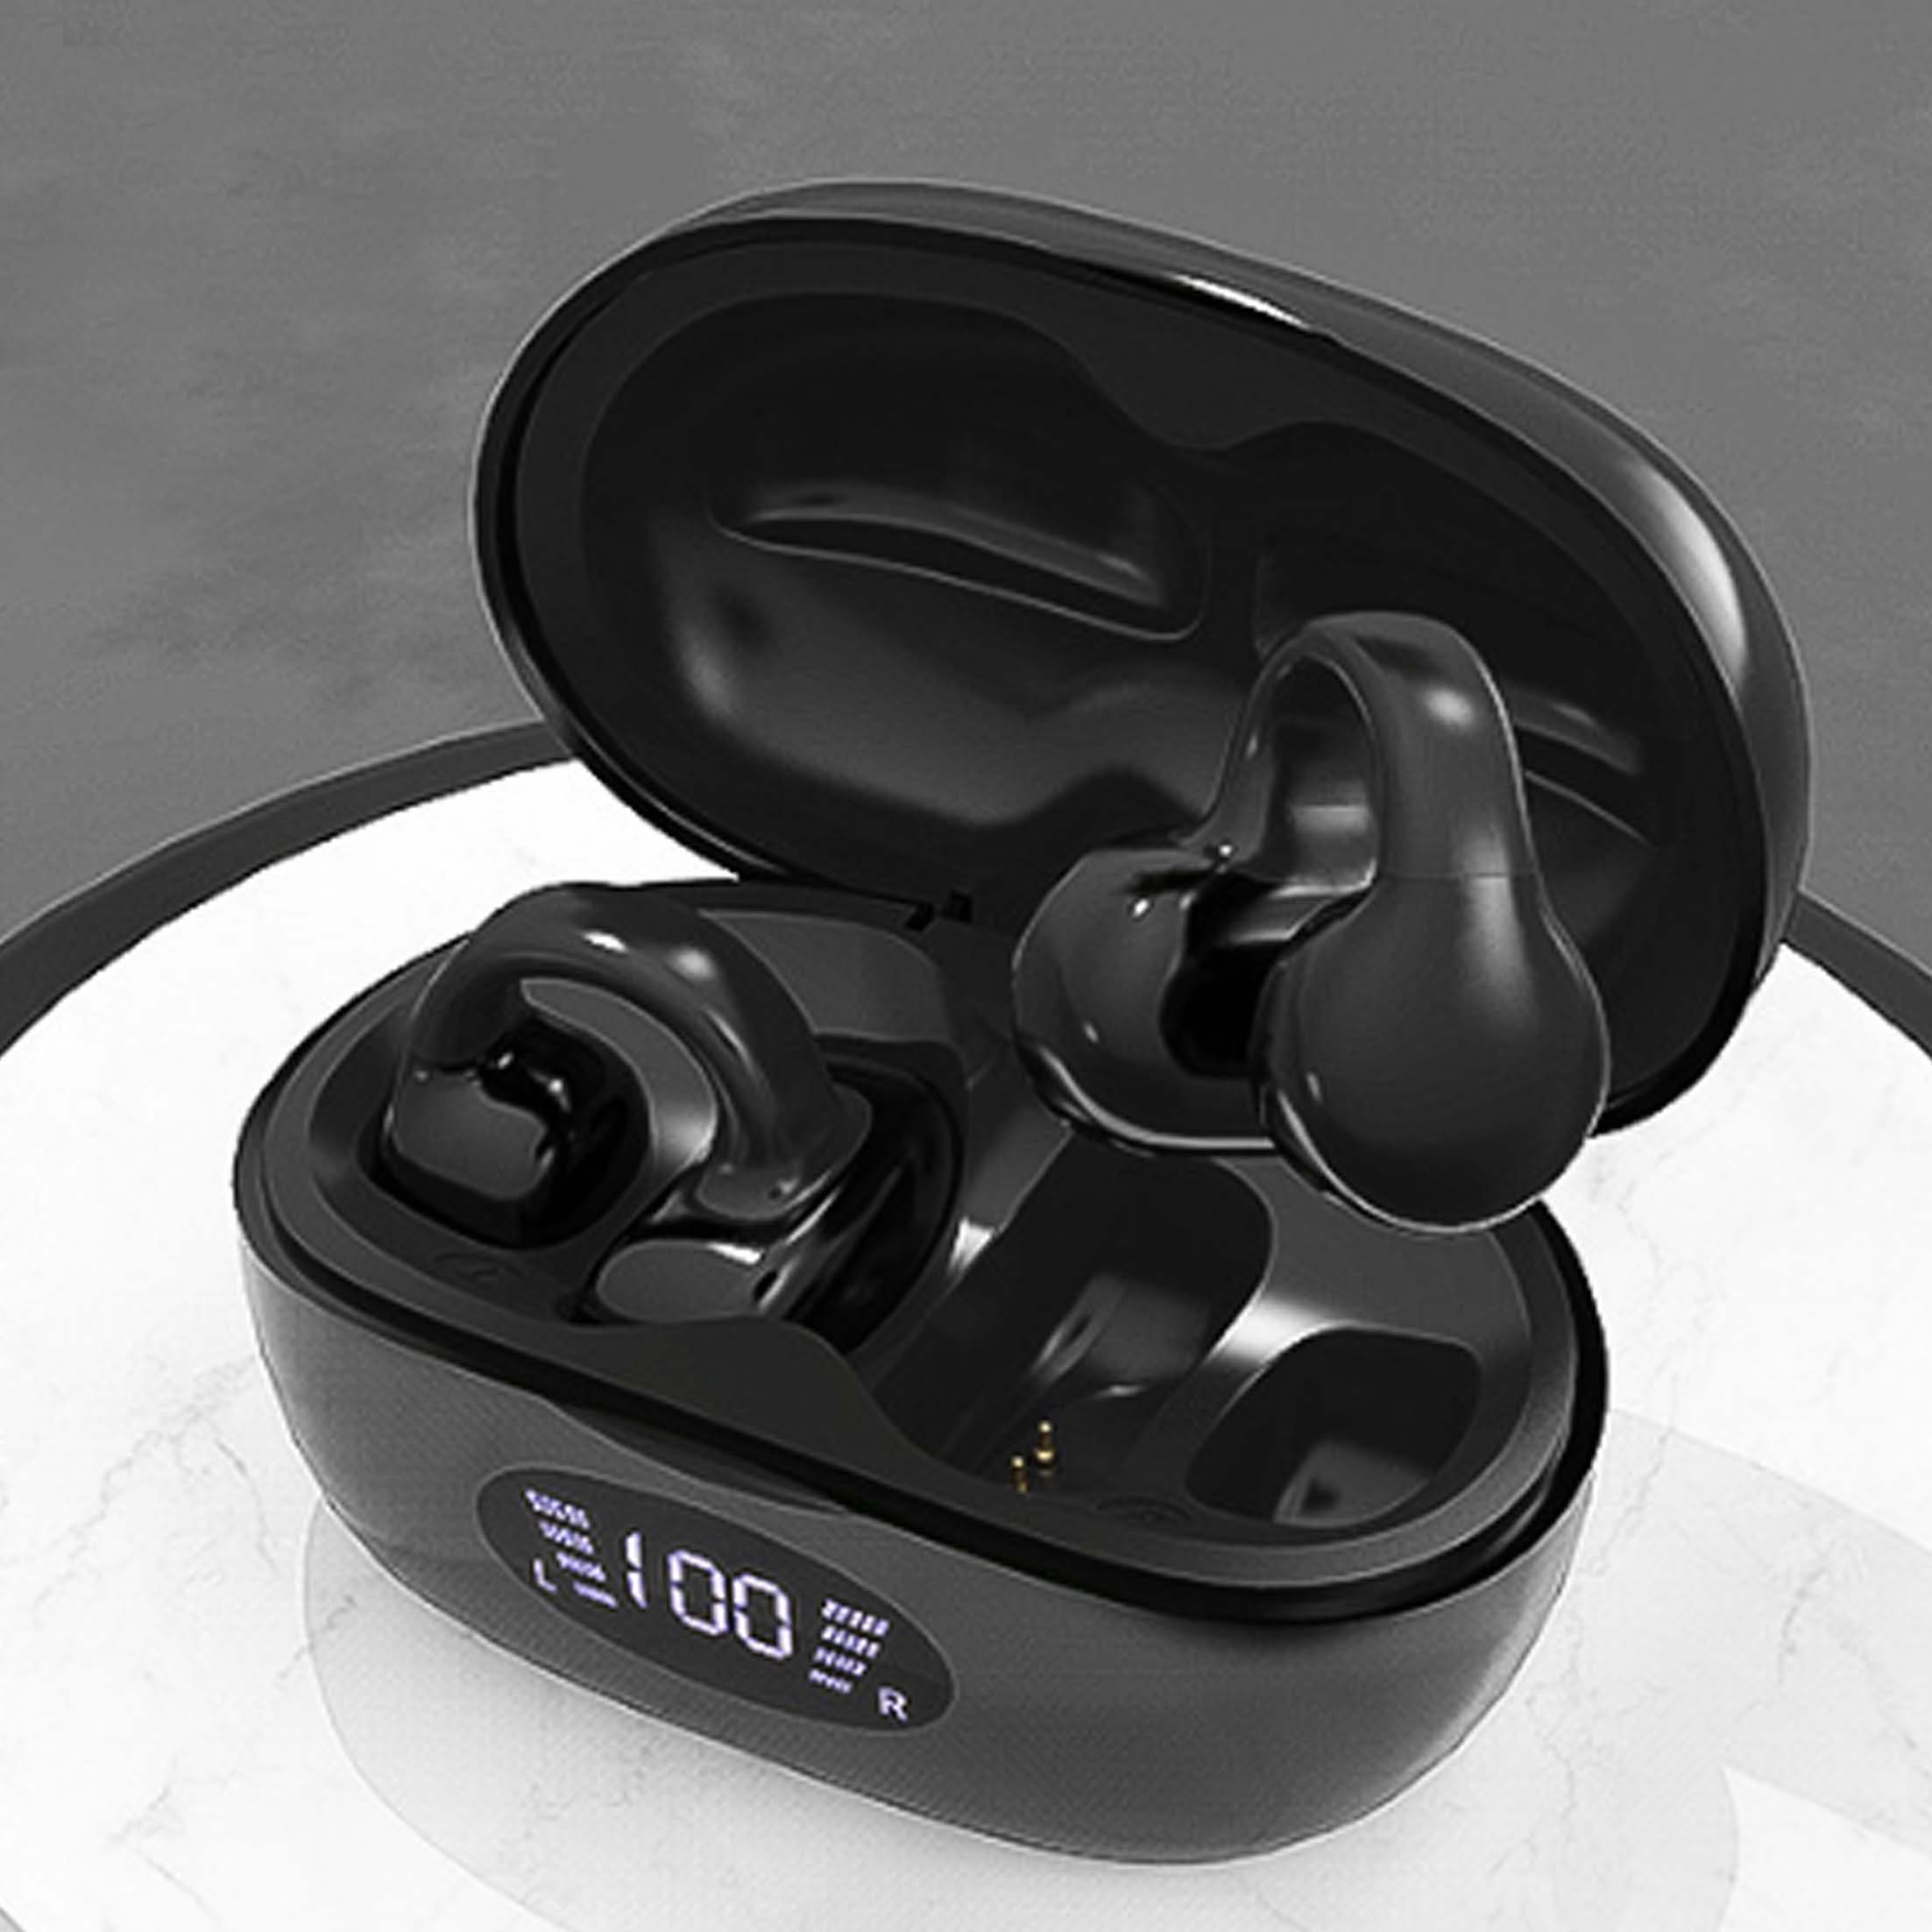 Diida Kopfhörer, Bluetooth-Kopfhörer, Knochenleitungskopfhörer Bluetooth-Kopfhörer (bluetooth, Beidseitiges Stereo, verlustfreie HIFI-Klangqualität, Bluetooth 5.3)